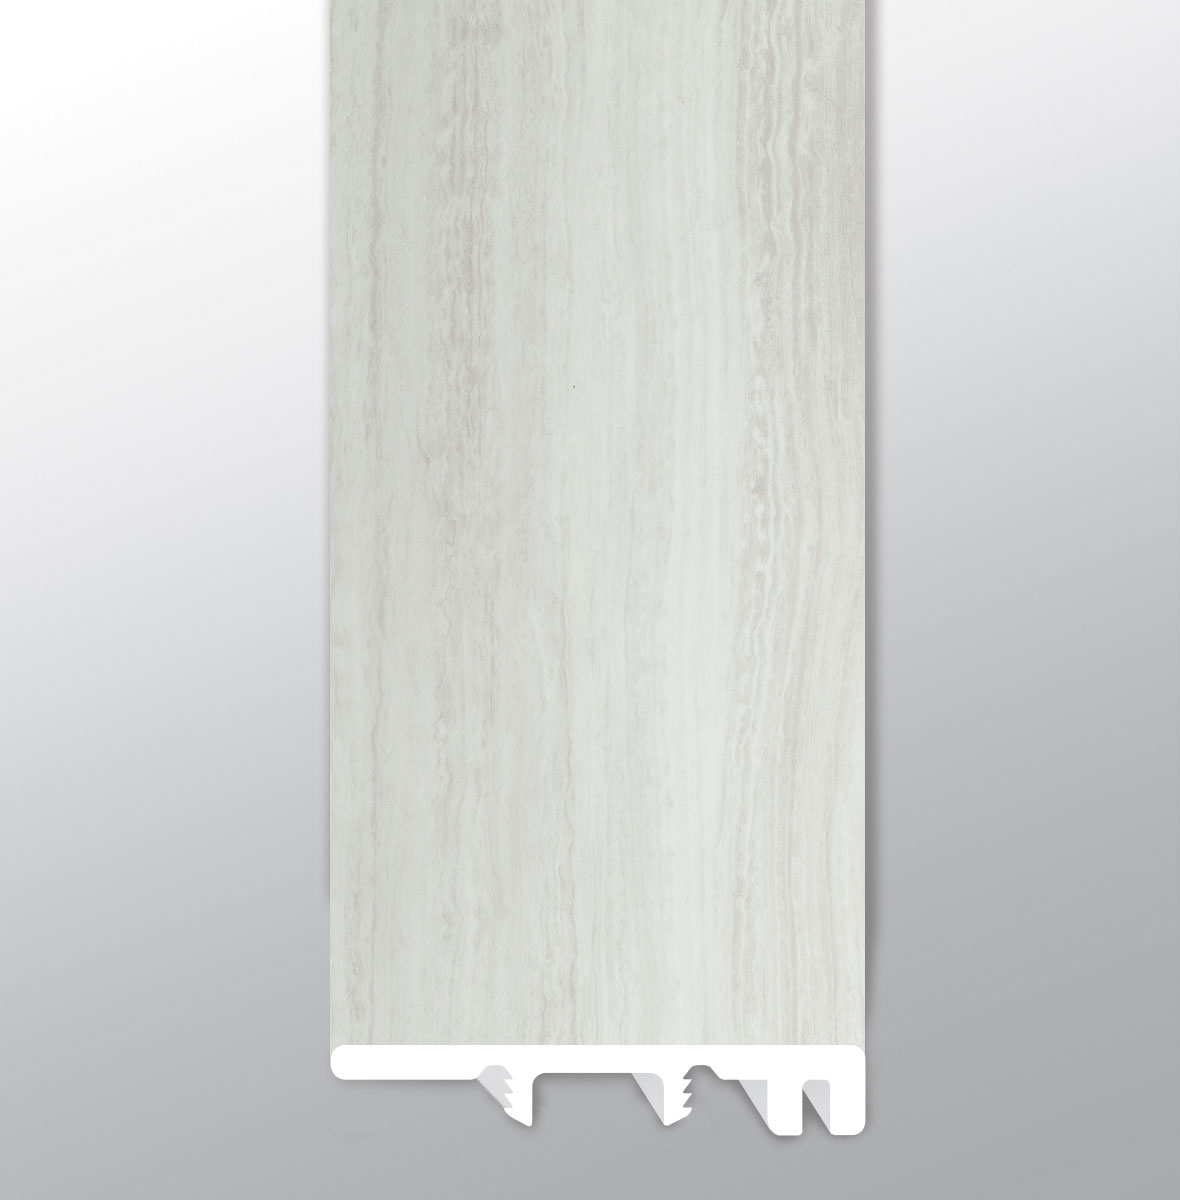 MSI Rigid Core Luxury Vinyl Plank Flooring 12x24 White Ocean